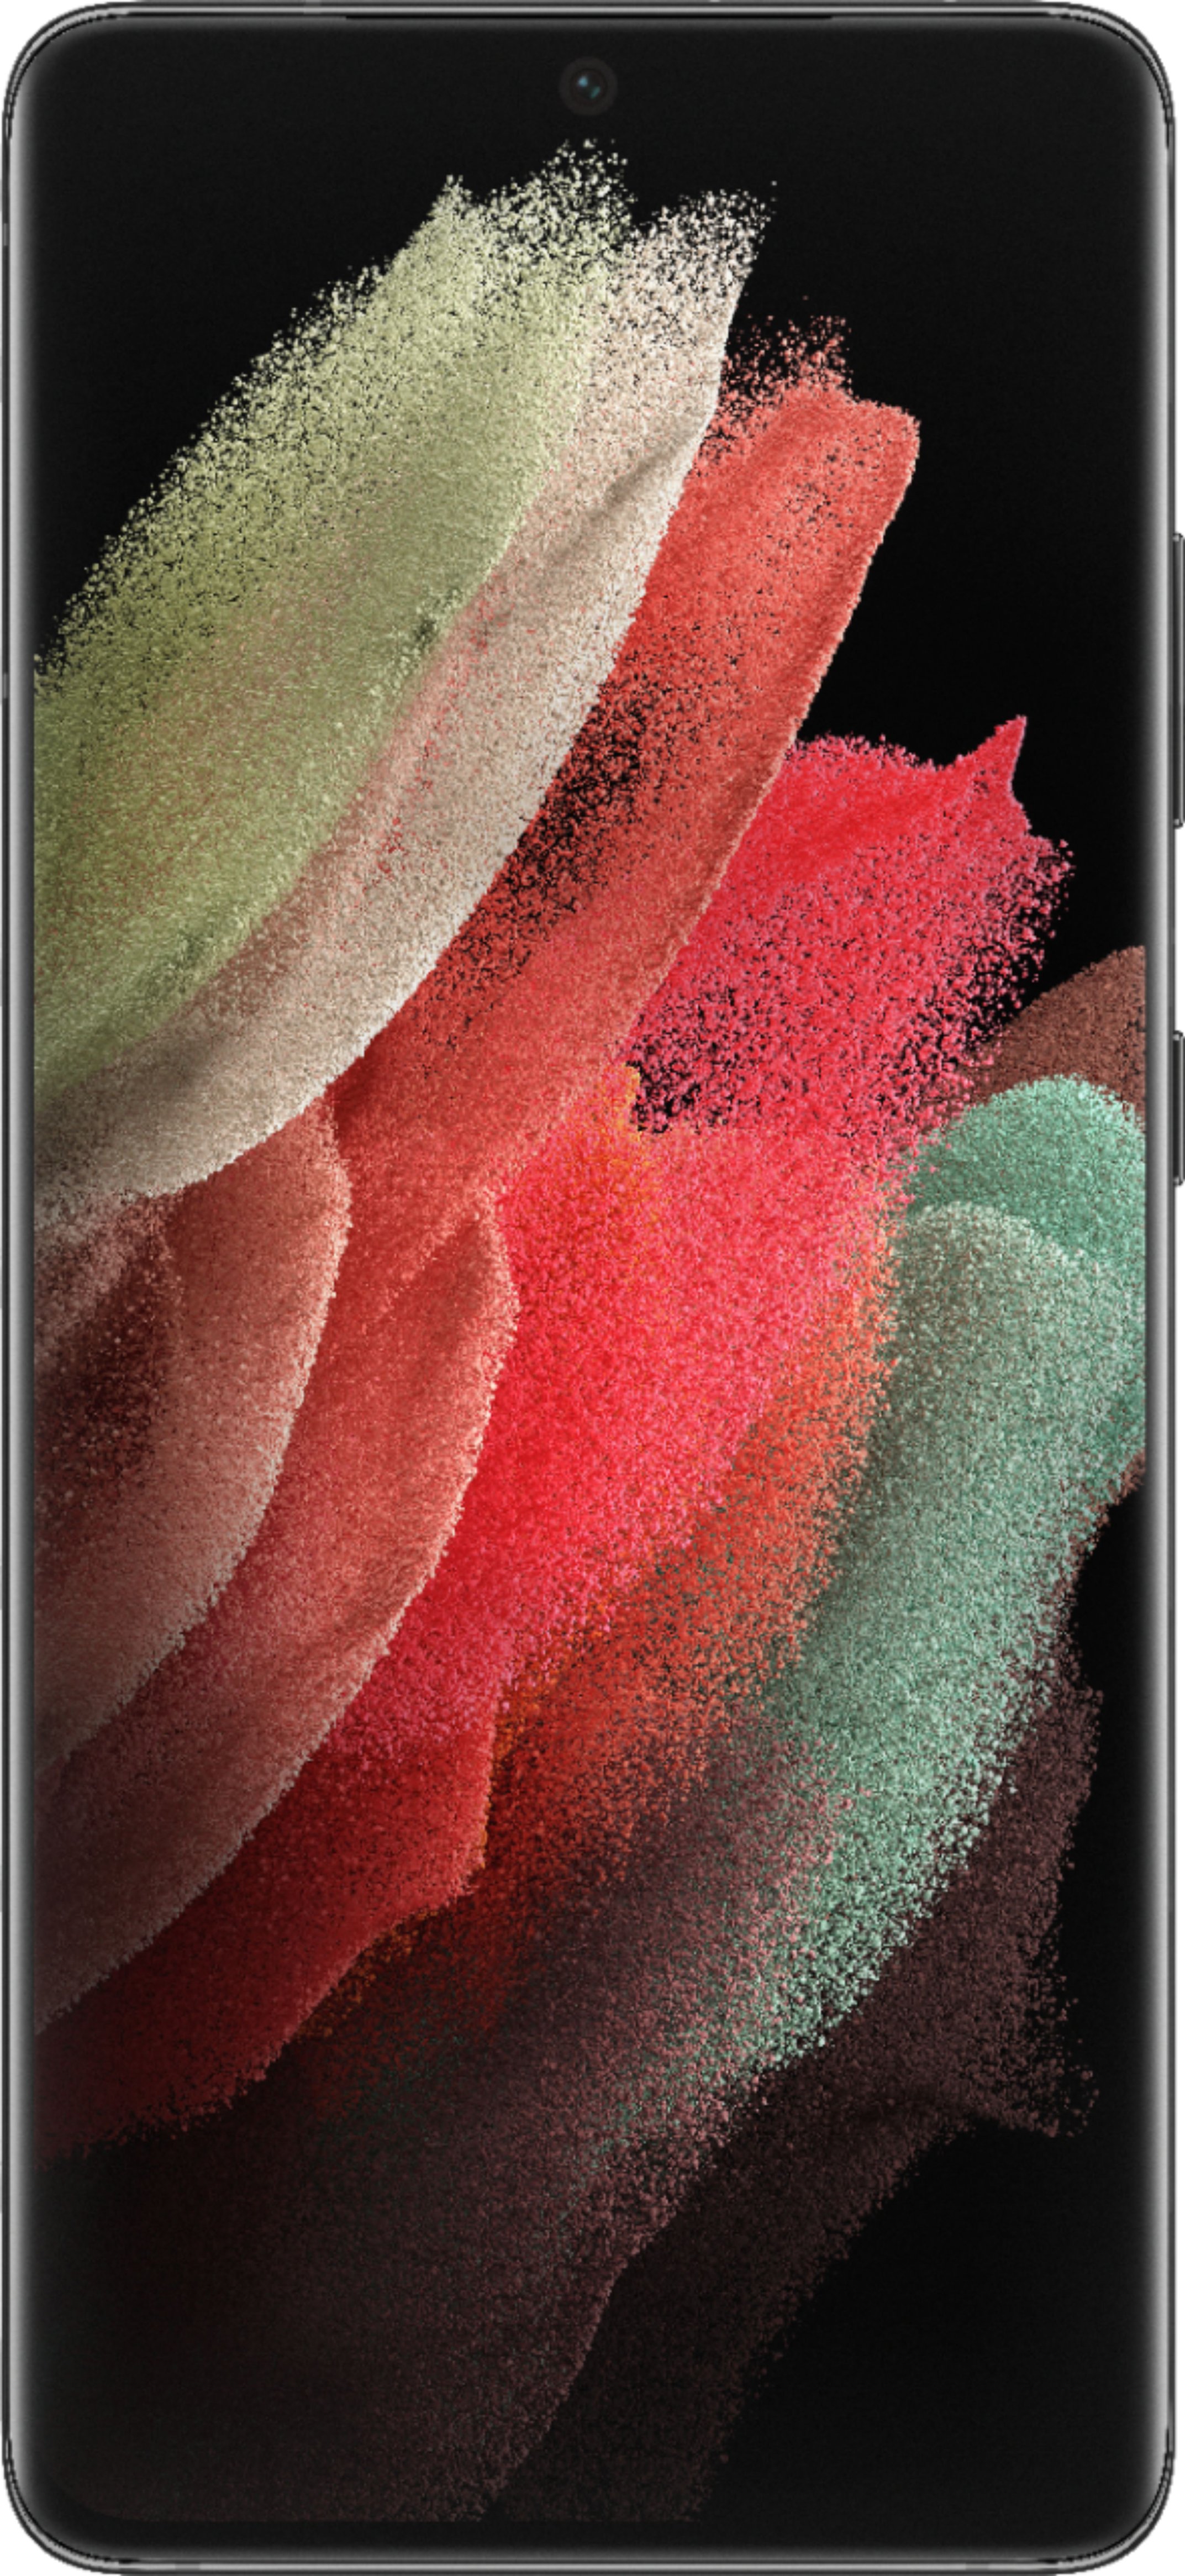 Samsung Galaxy S21 Ultra (Phantom Black, 256 GB) (12 GB RAM)